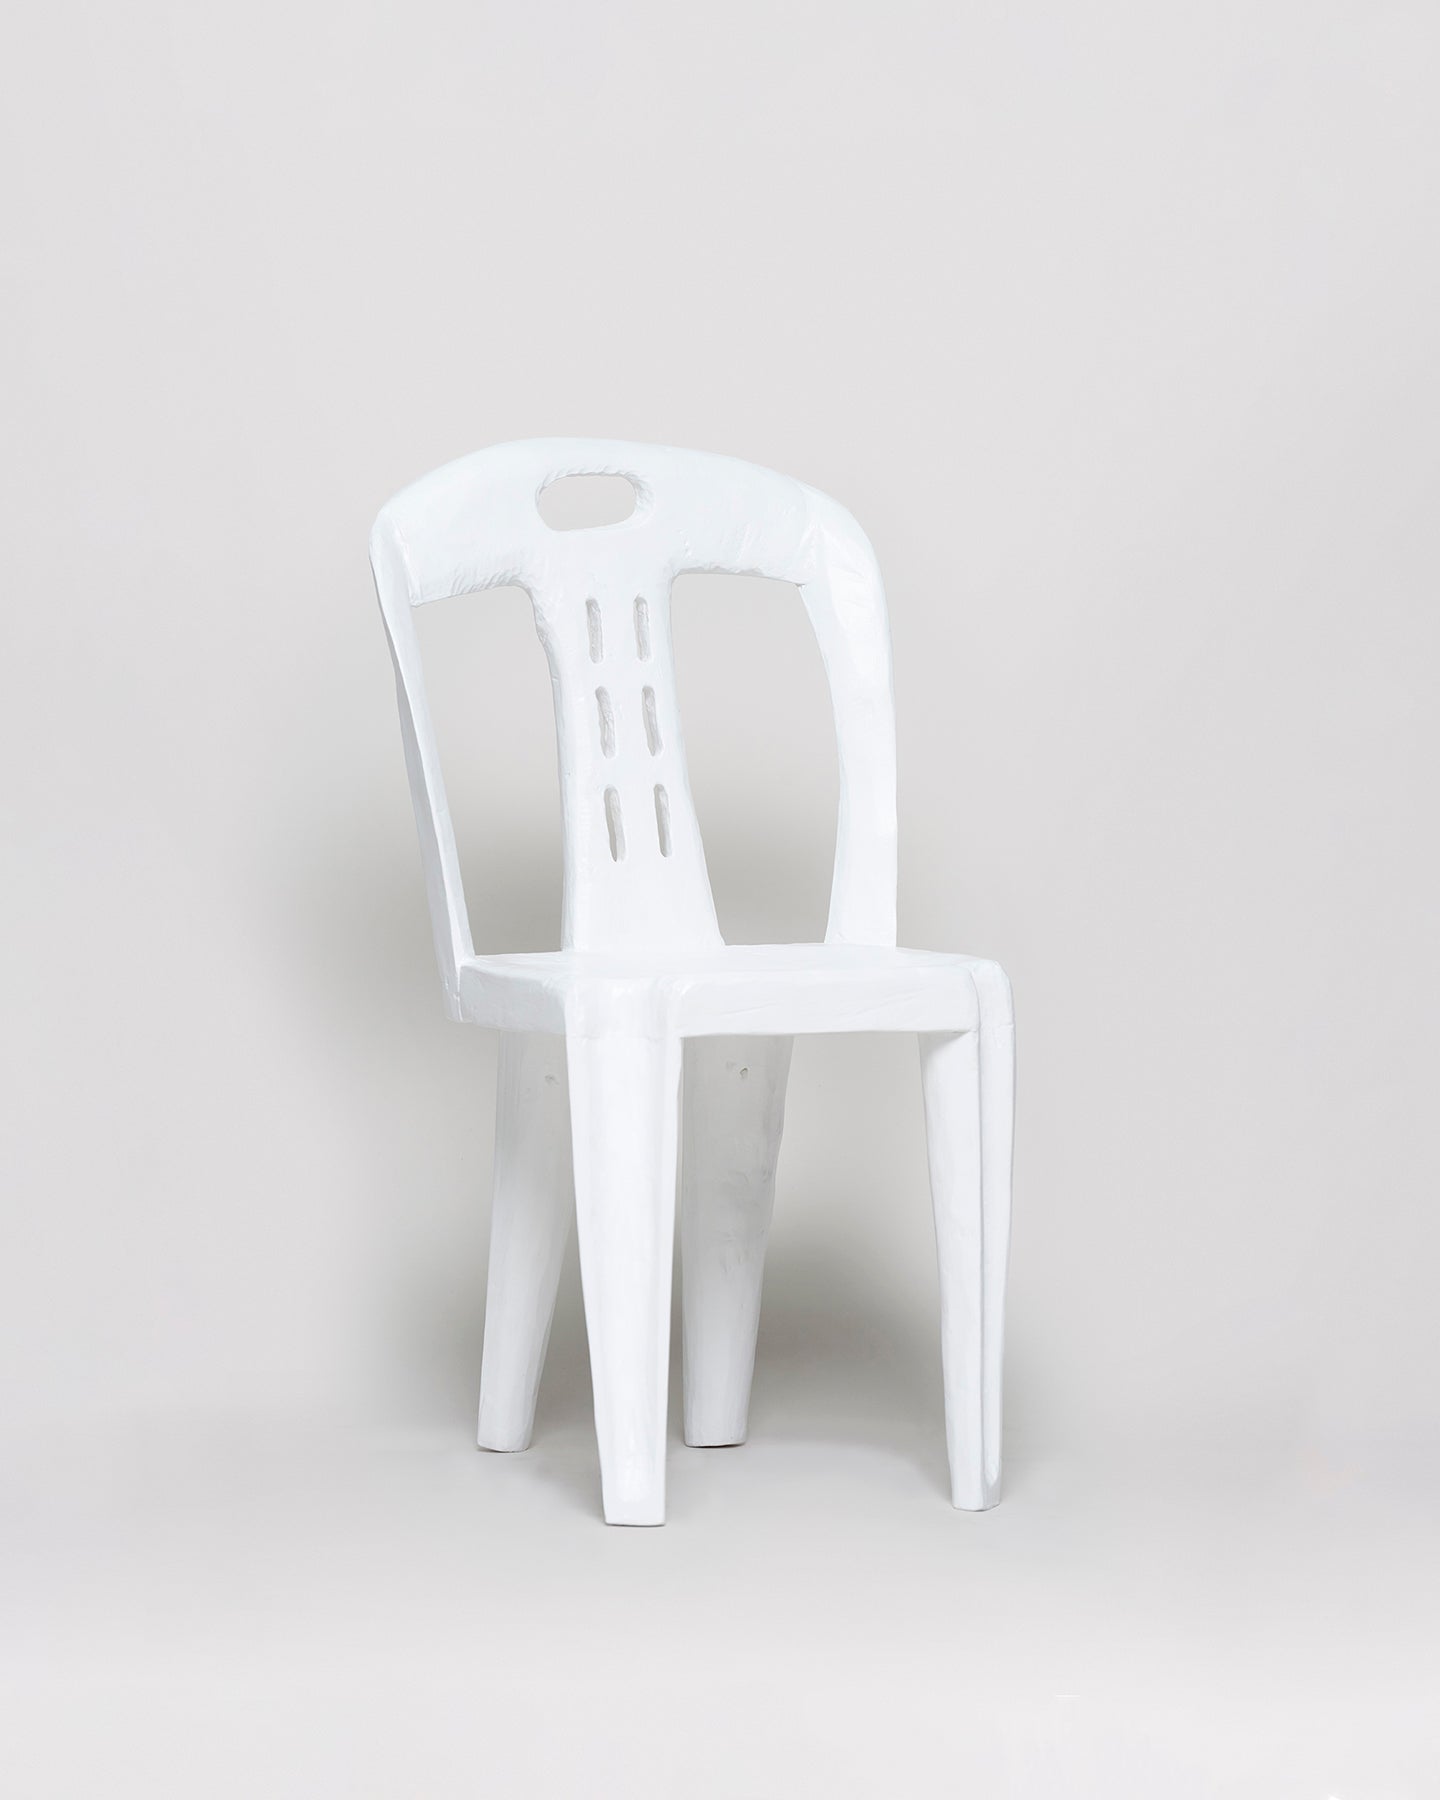 Everyday People (White Chair) 2022 - kombi